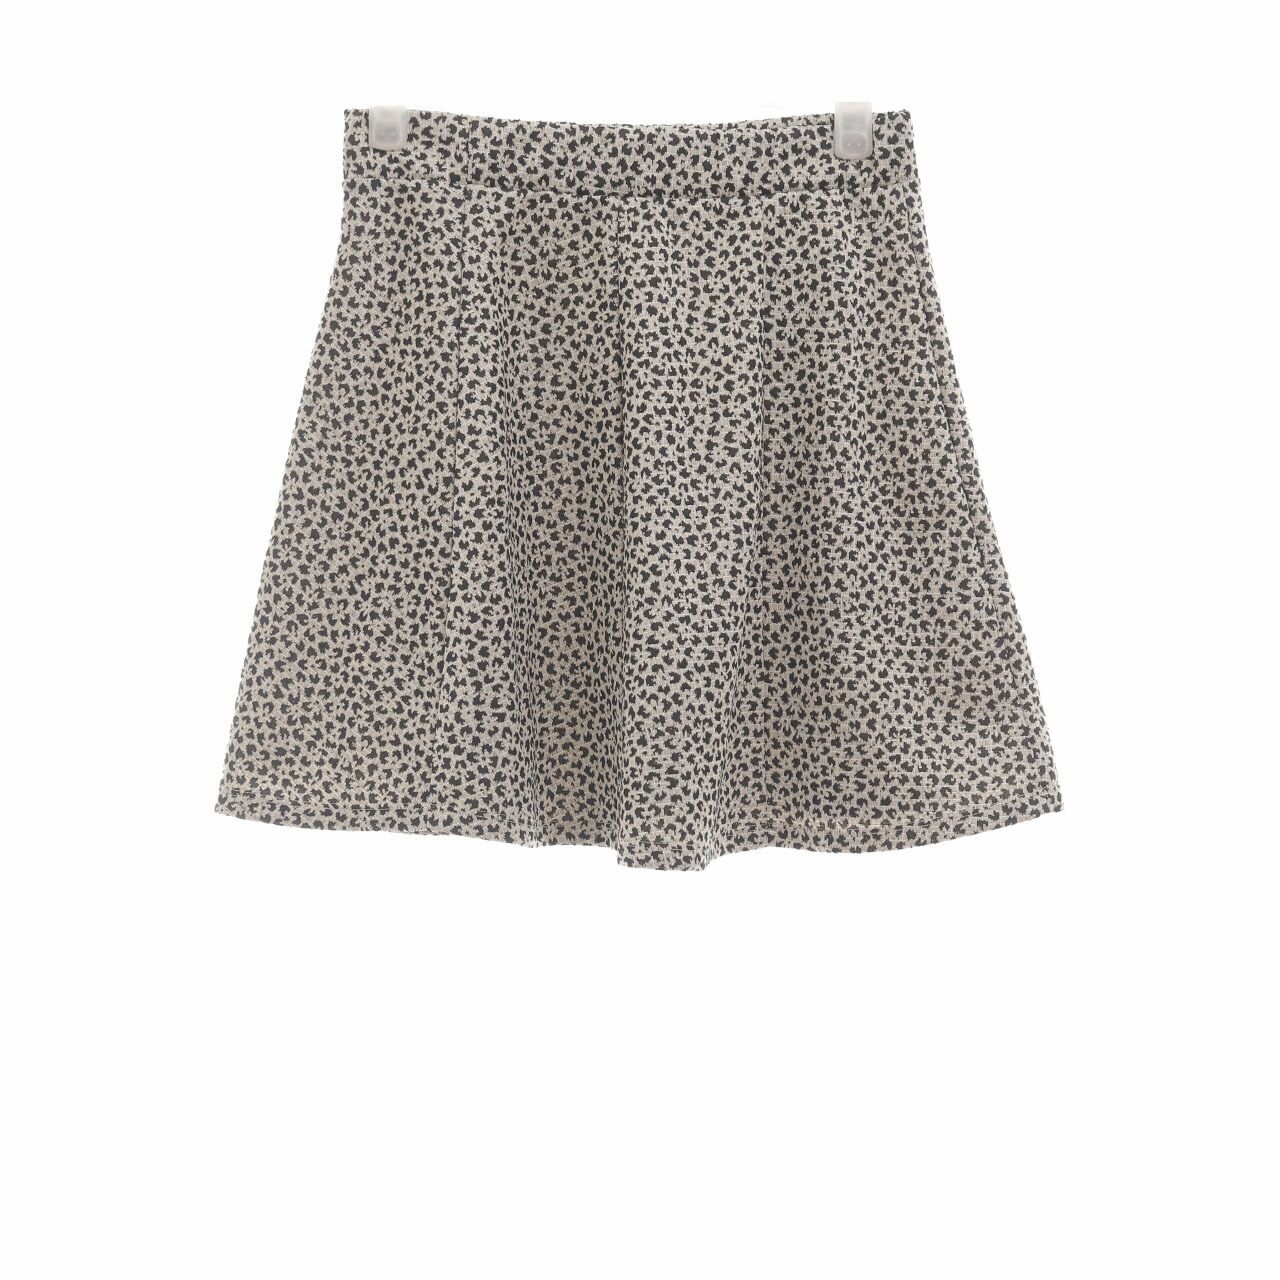 Zara Brown & Black Leopard Mini Skirt